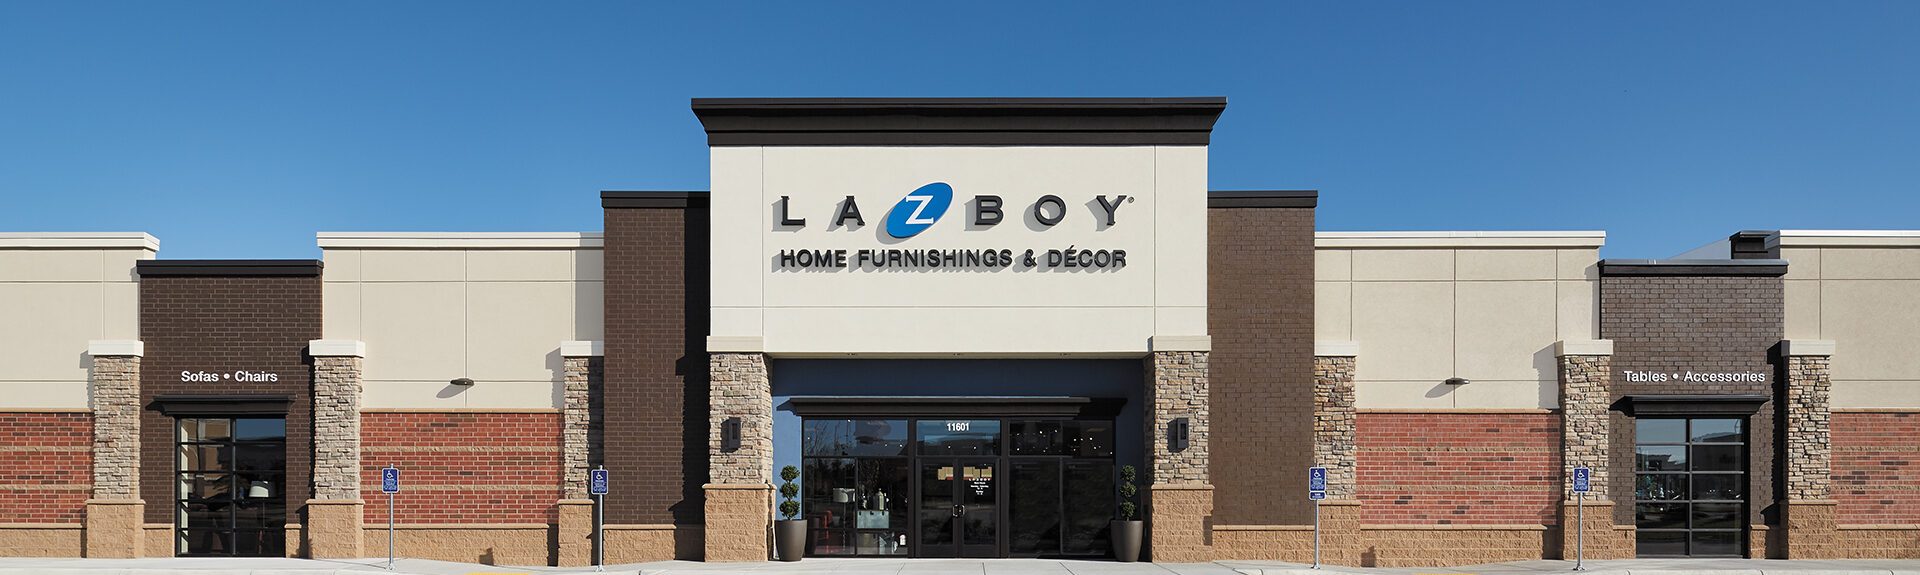 La-Z-Boy Home Furnishings Decor Showroom